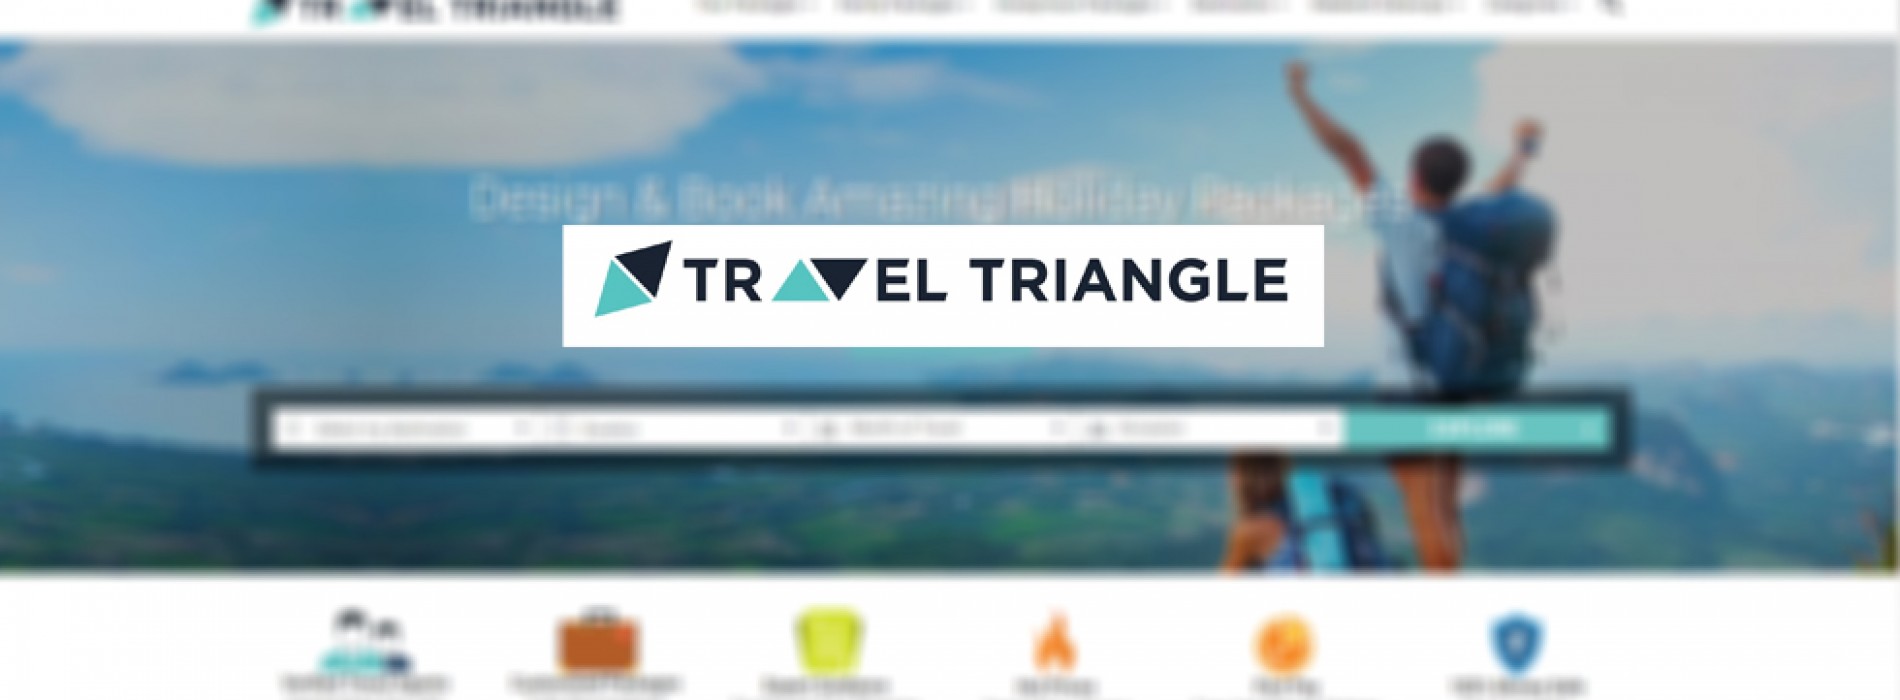 TravelTriangle raises $10 million in fresh round of funding